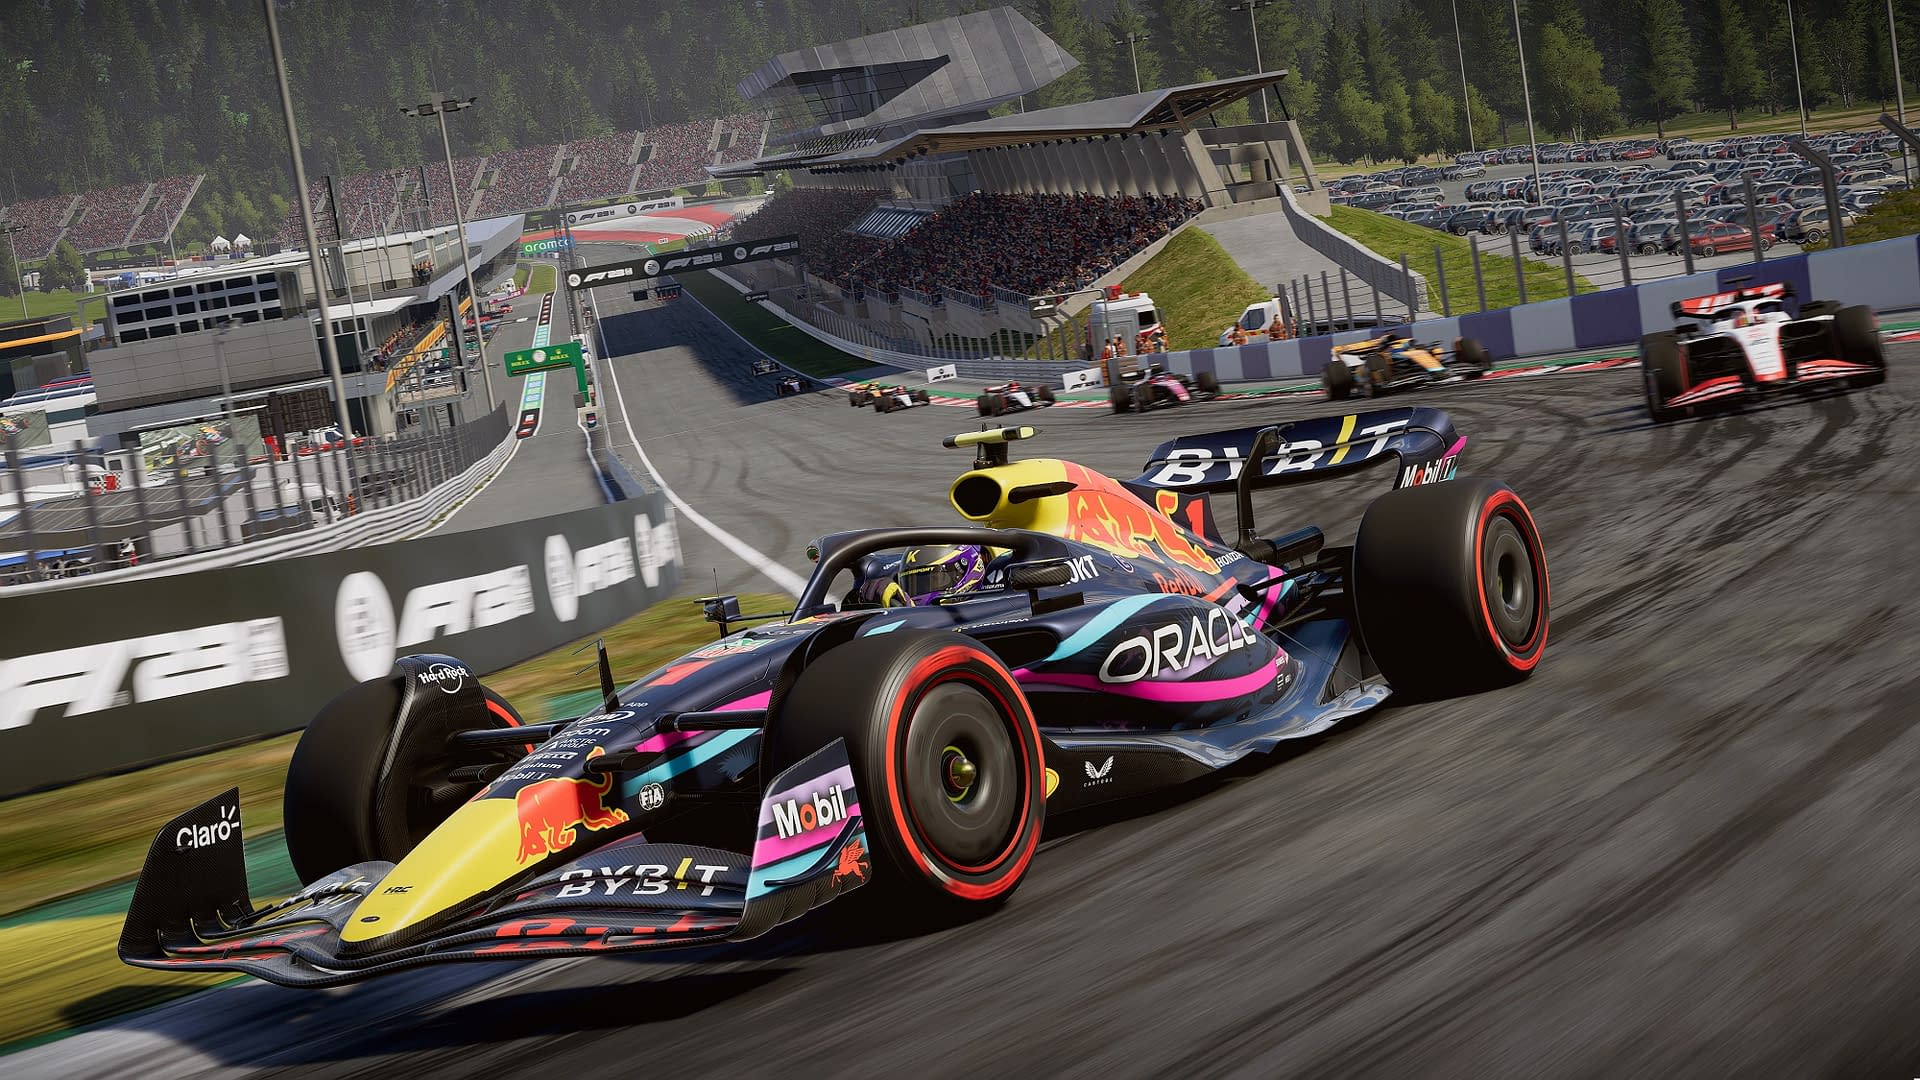 Podium Life: News & Previews for Car Racing Games Online